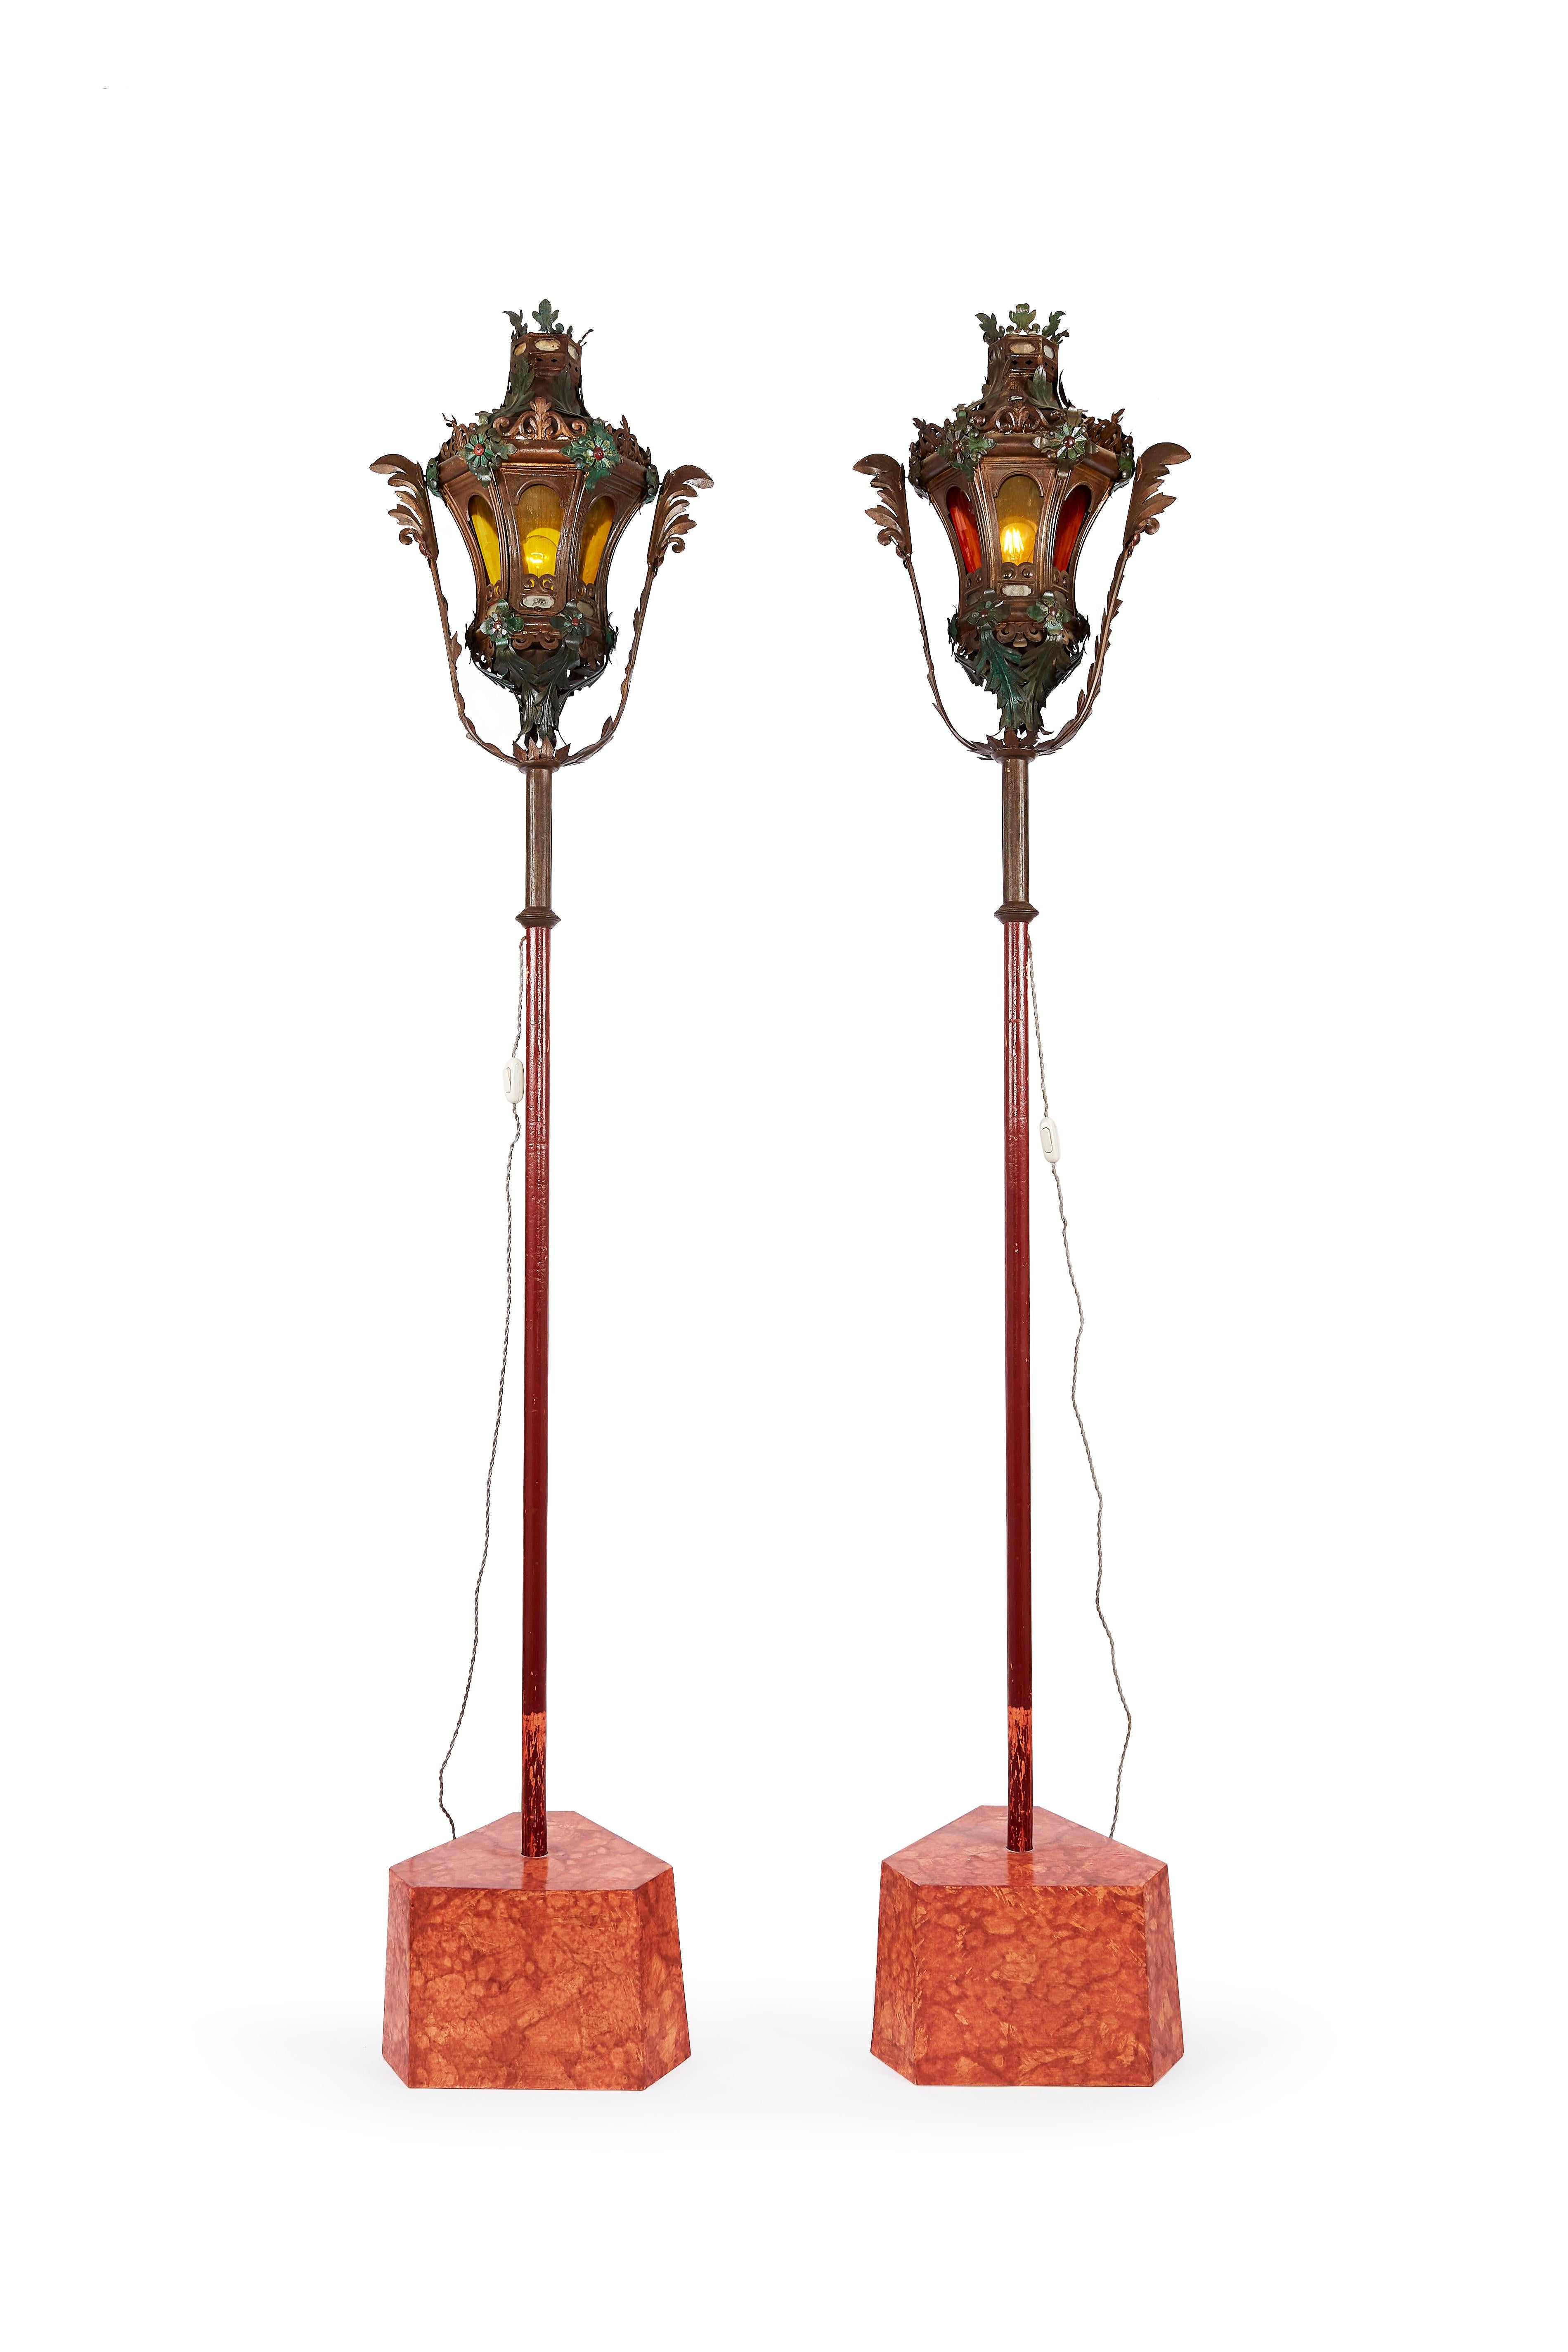 European Pair of Venetian Lanterns 19th Century Italian Gondola Lamps Baroque Style